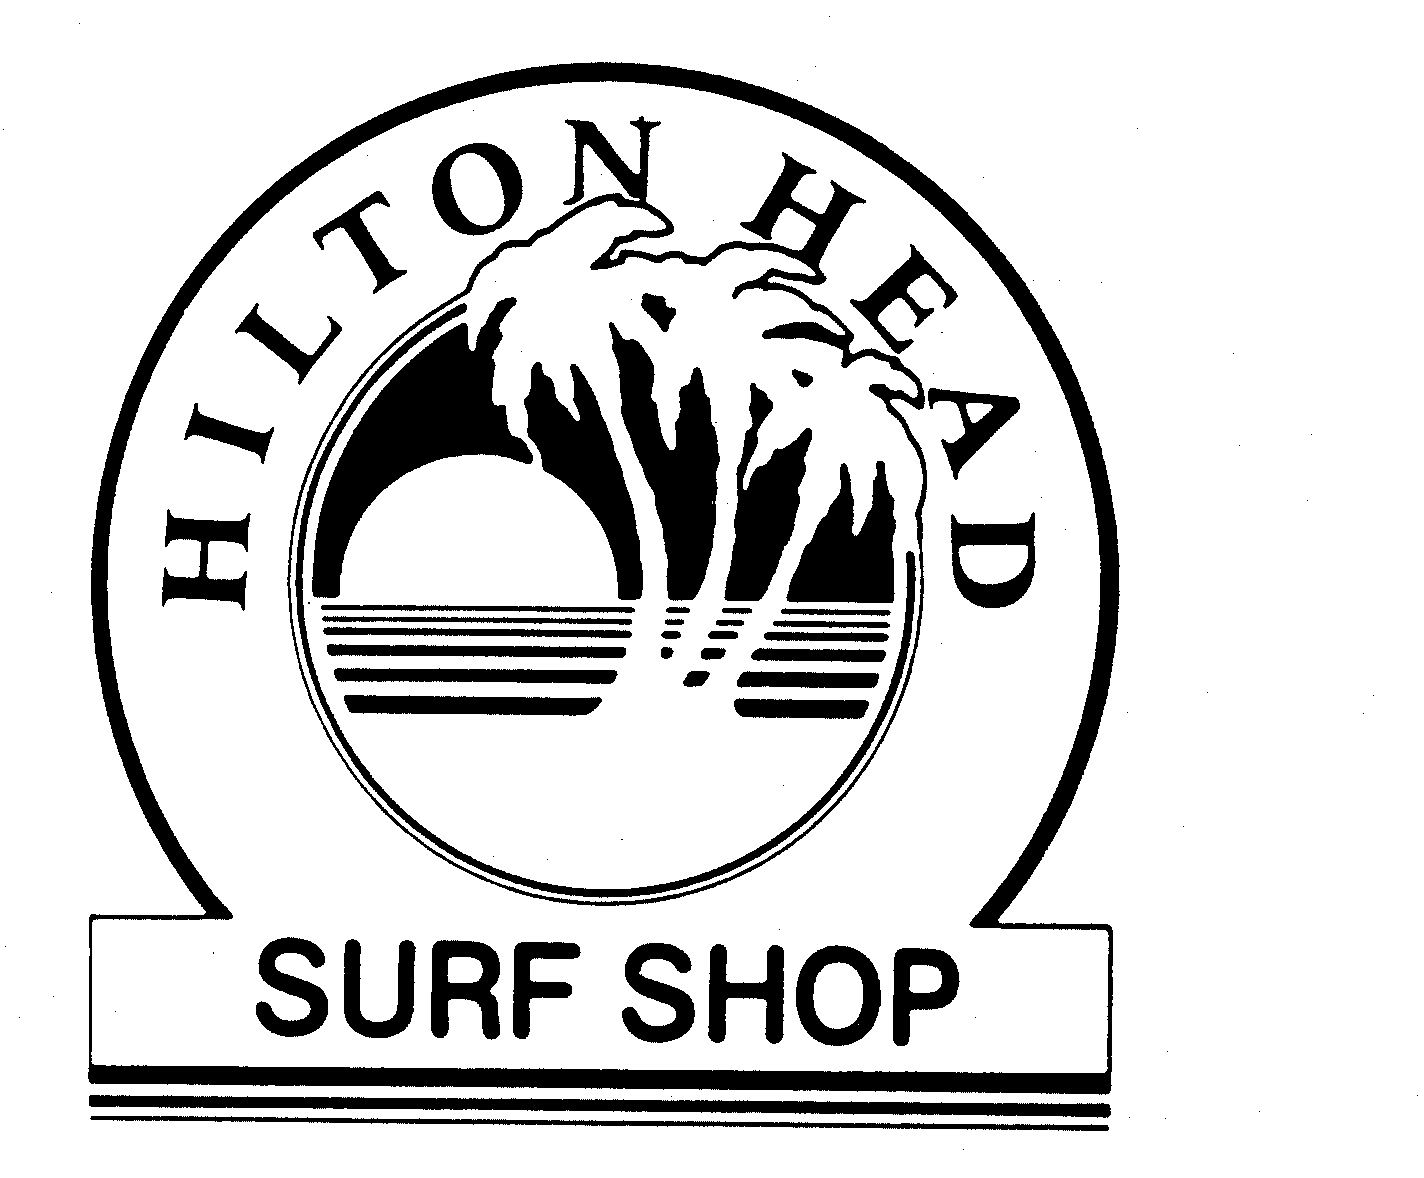  HILTON HEAD SURF SHOP